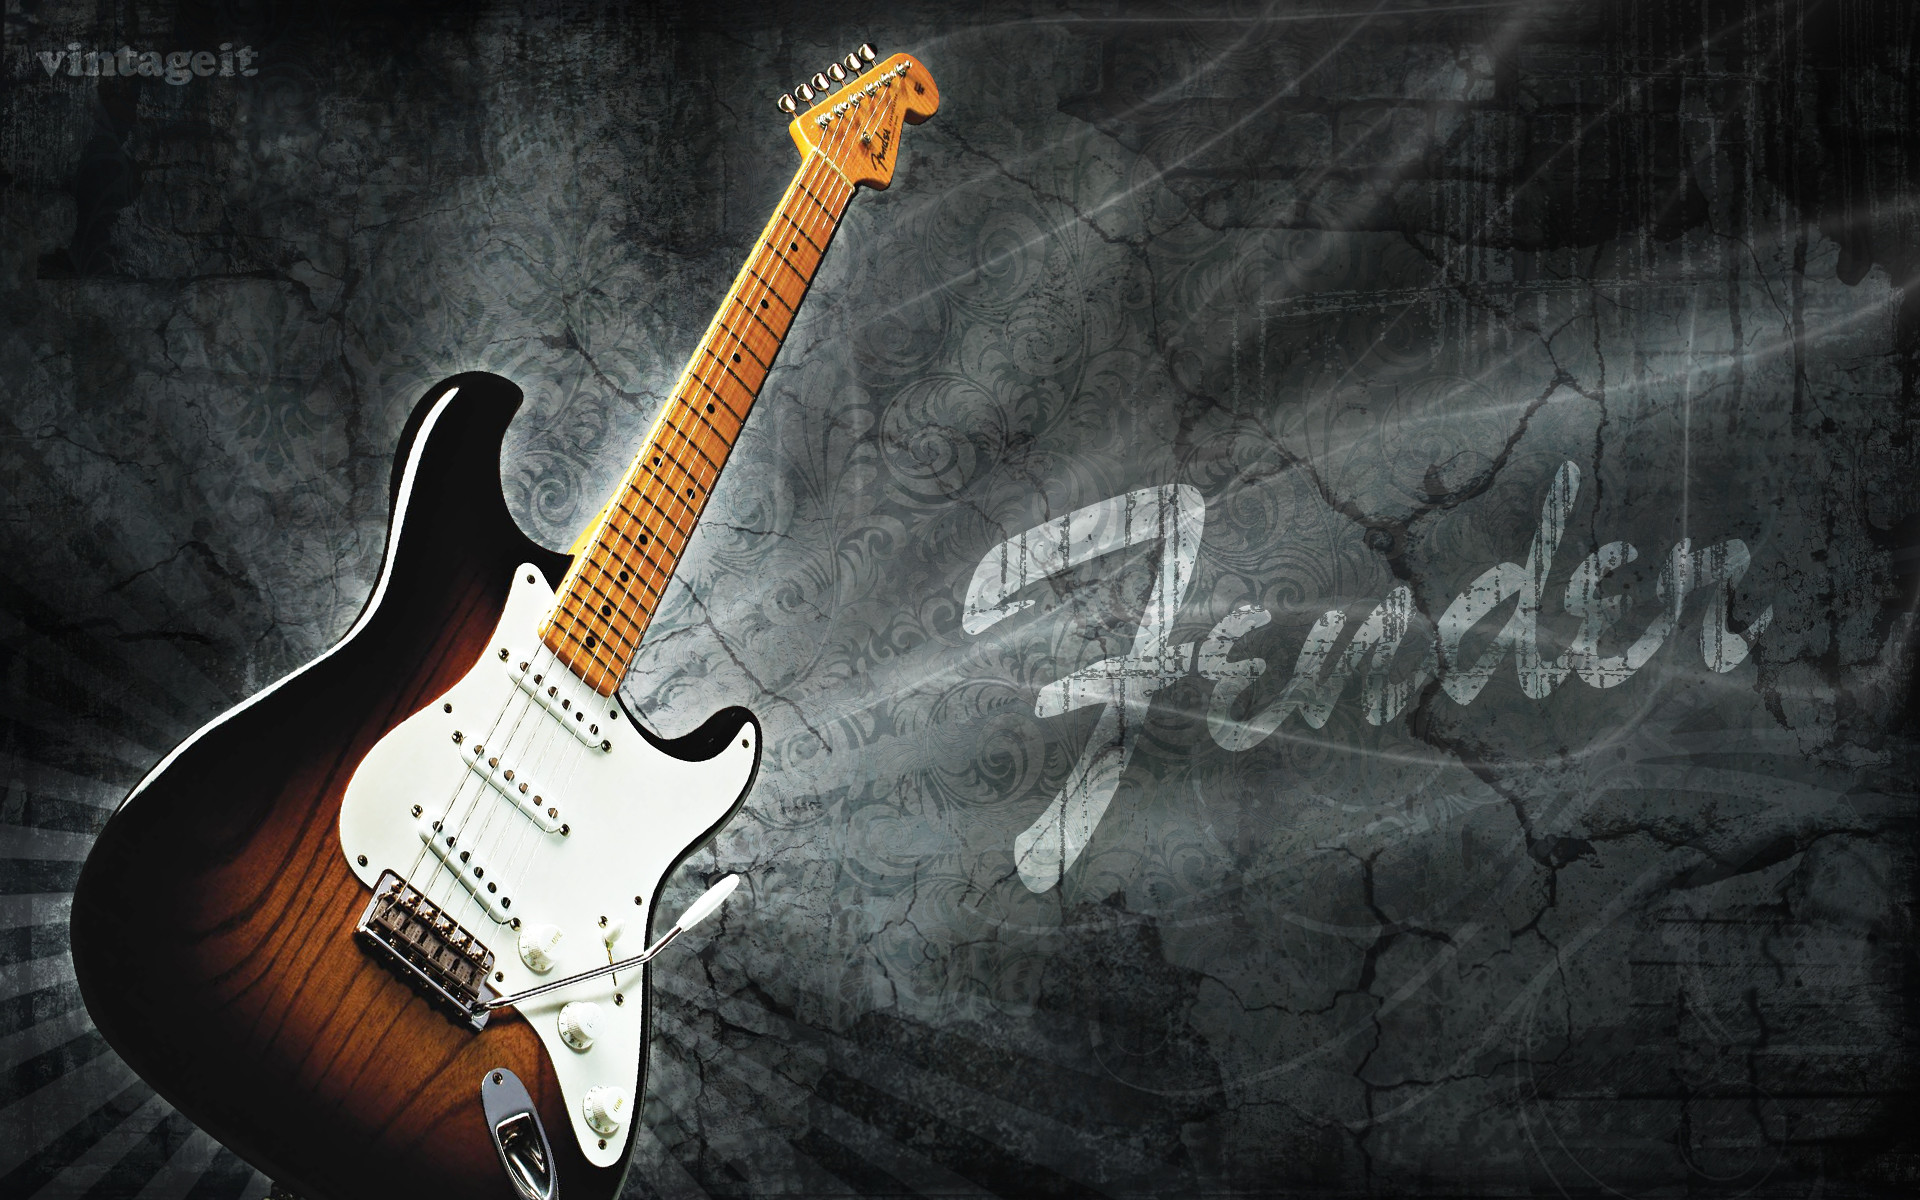 Fender Stratocaster wallpaper – Free Desktop HD iPad iPhone wallpapers